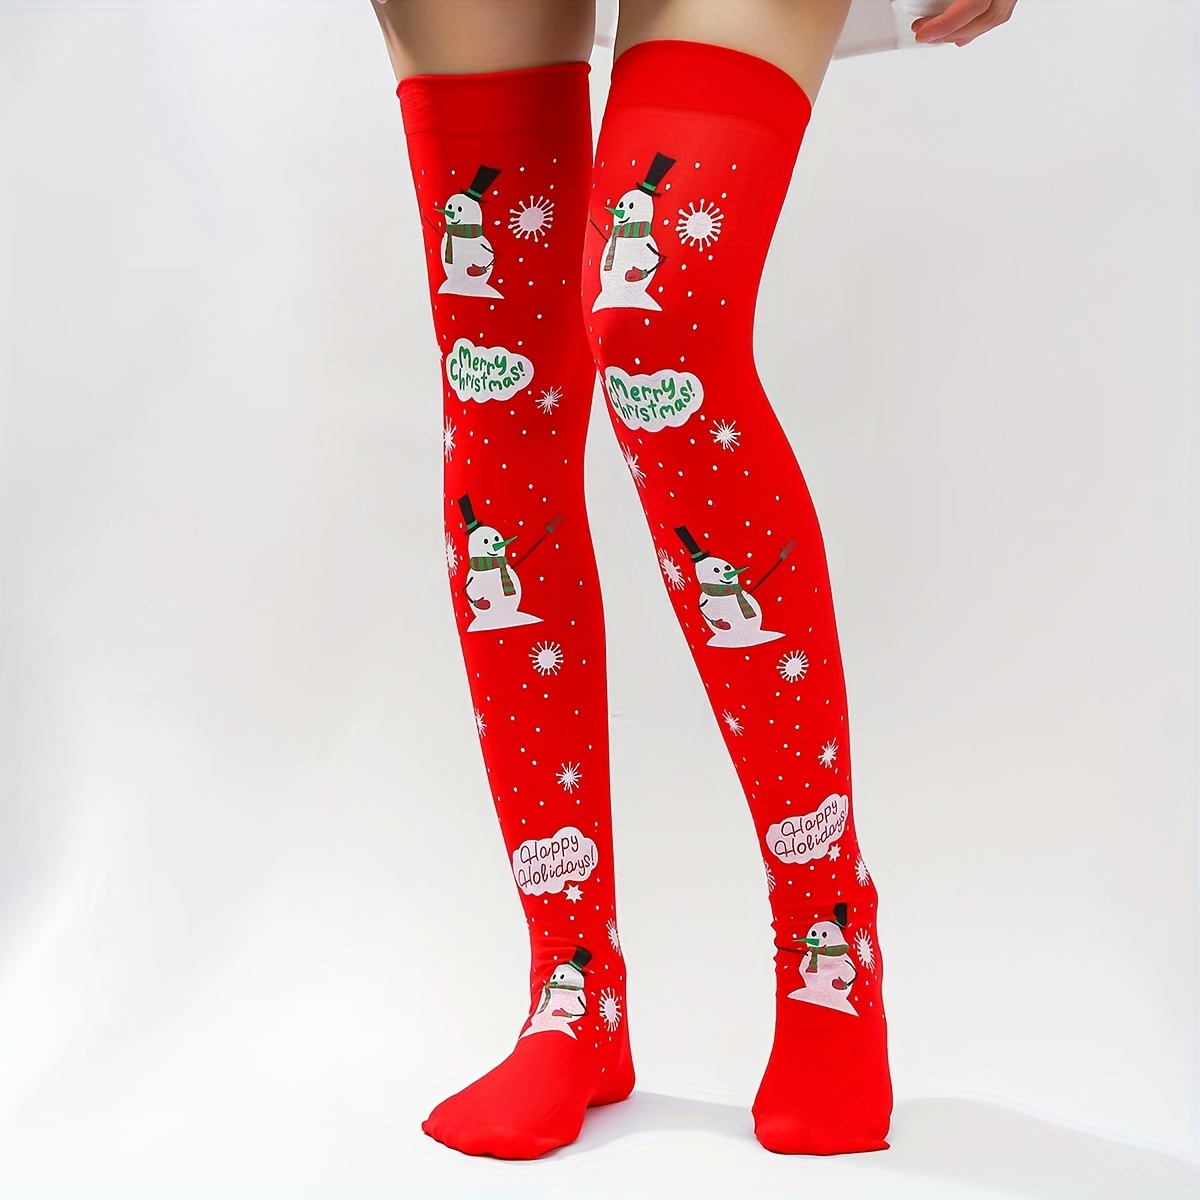 Thigh High Fuzzy Socks Cute Cartoon Over the Knee Stockings Cozy Furry  Thigh Highs Warm & Soft Stocking Cute Gift Winter Leg Warmer -  Canada